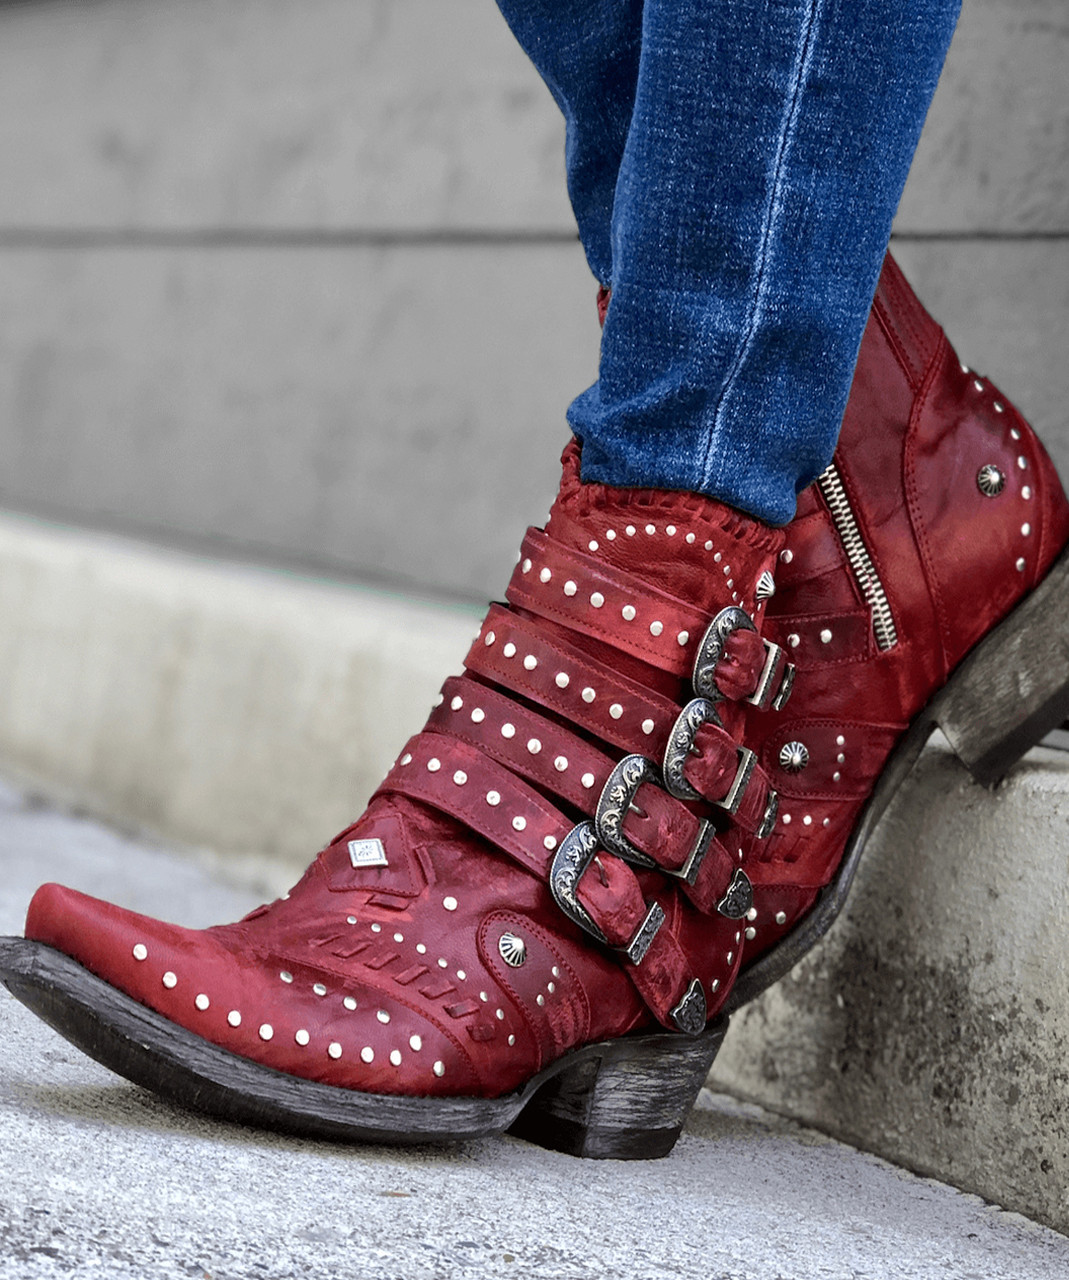 Red Platform High Heel Boots | Boots, Red high heel boots, Heels